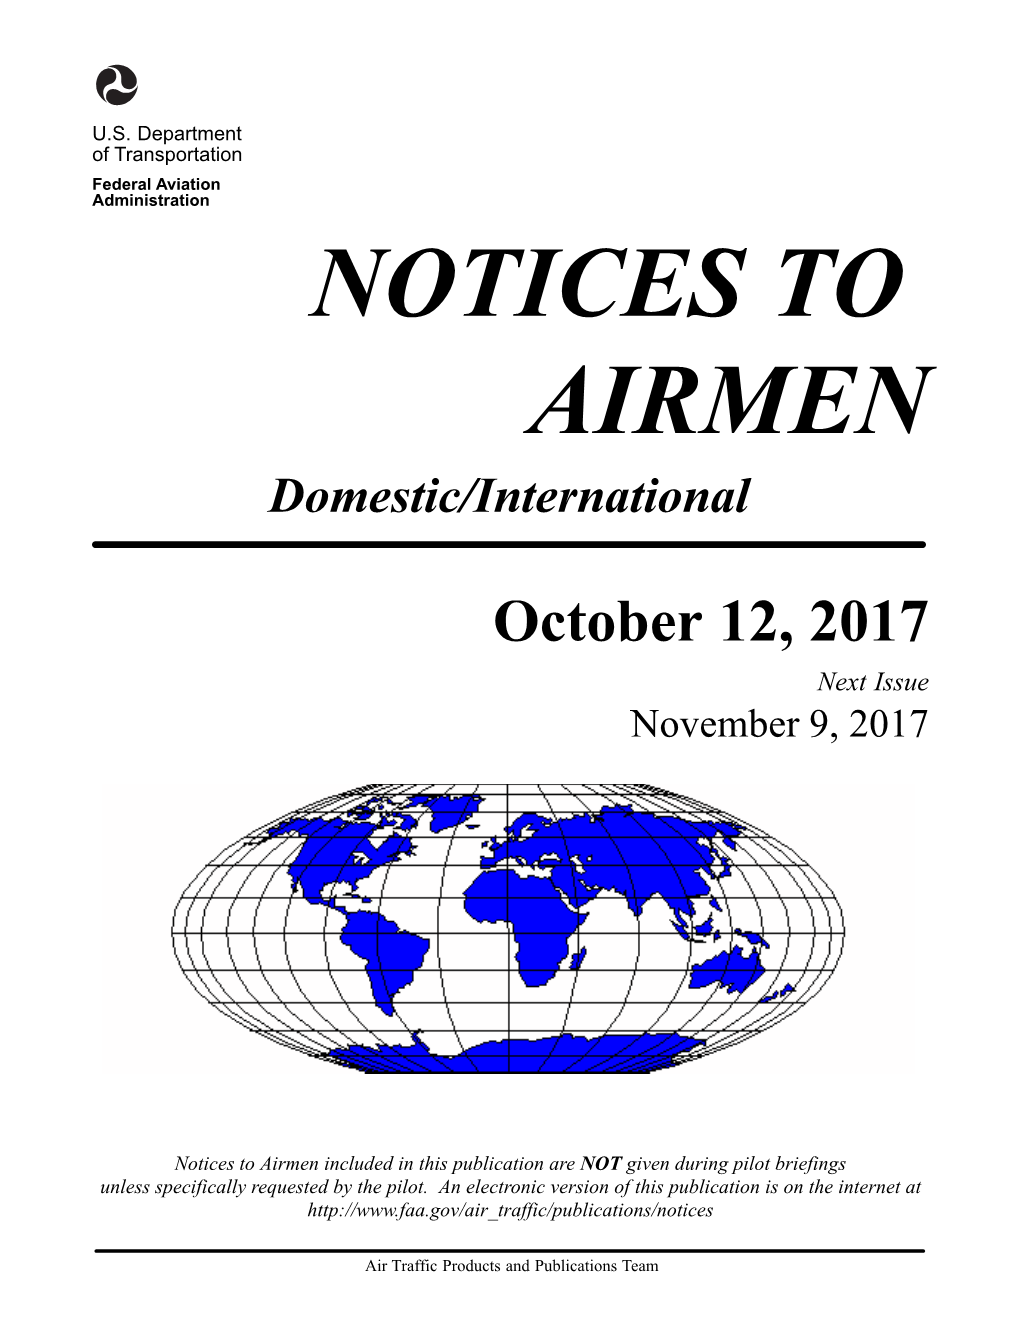 October 12, 2017 Notices to Airmen